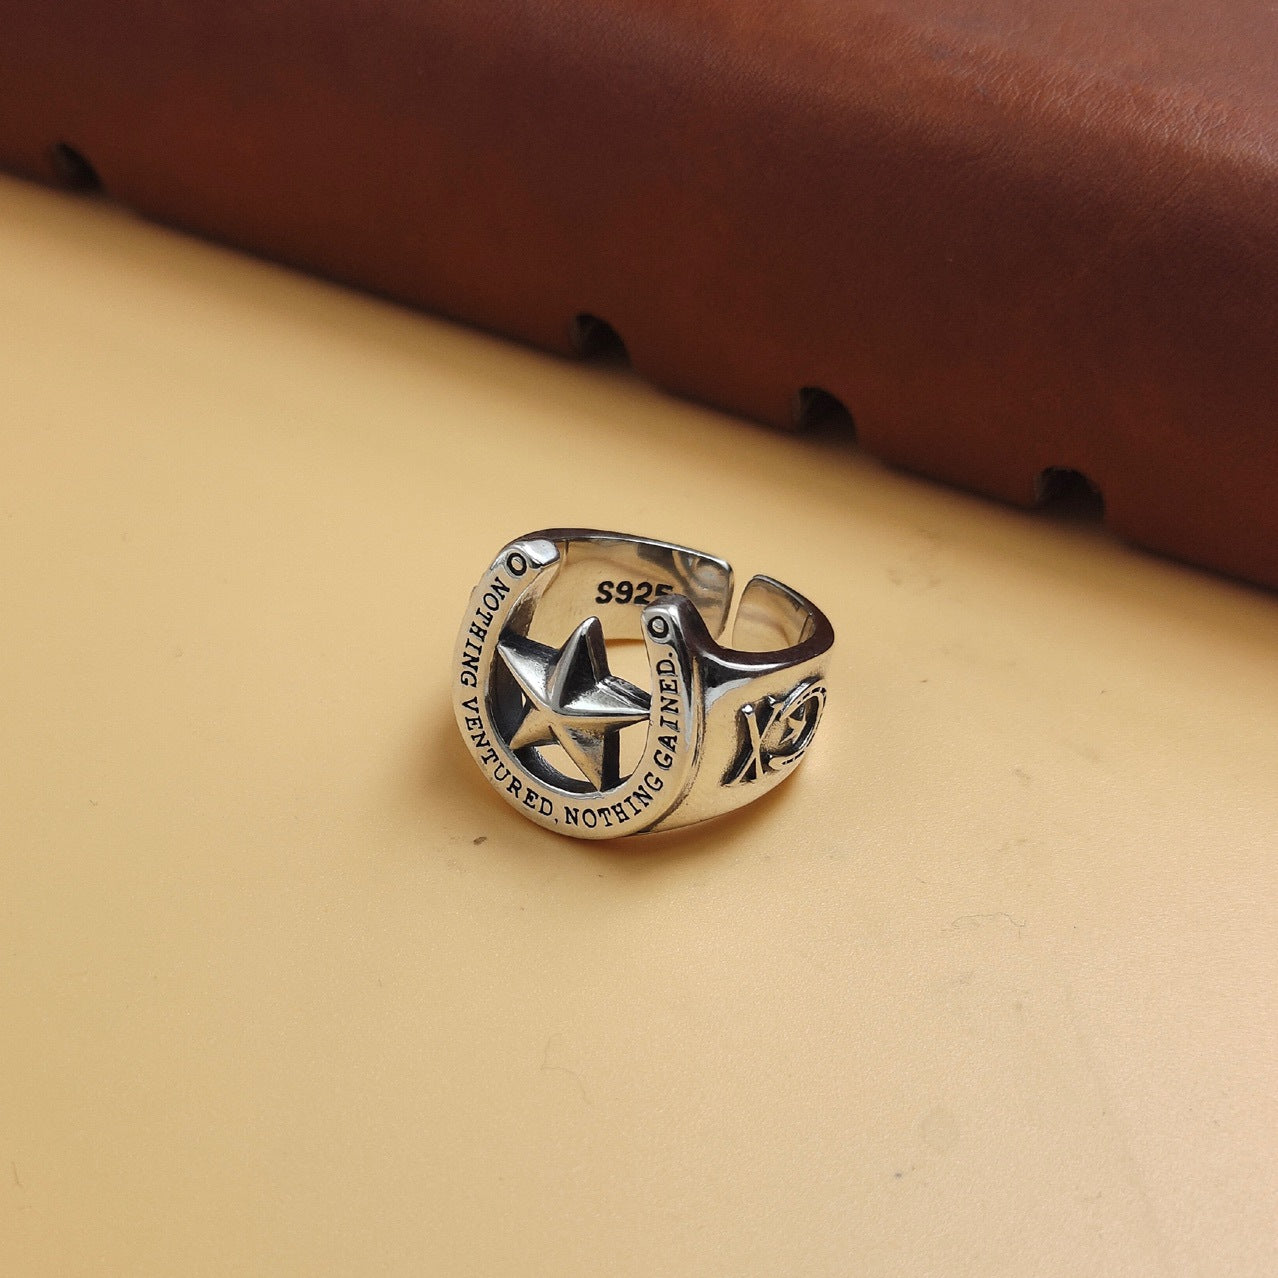  Men's S925 Silver Ring featuring a Shining Star Motif